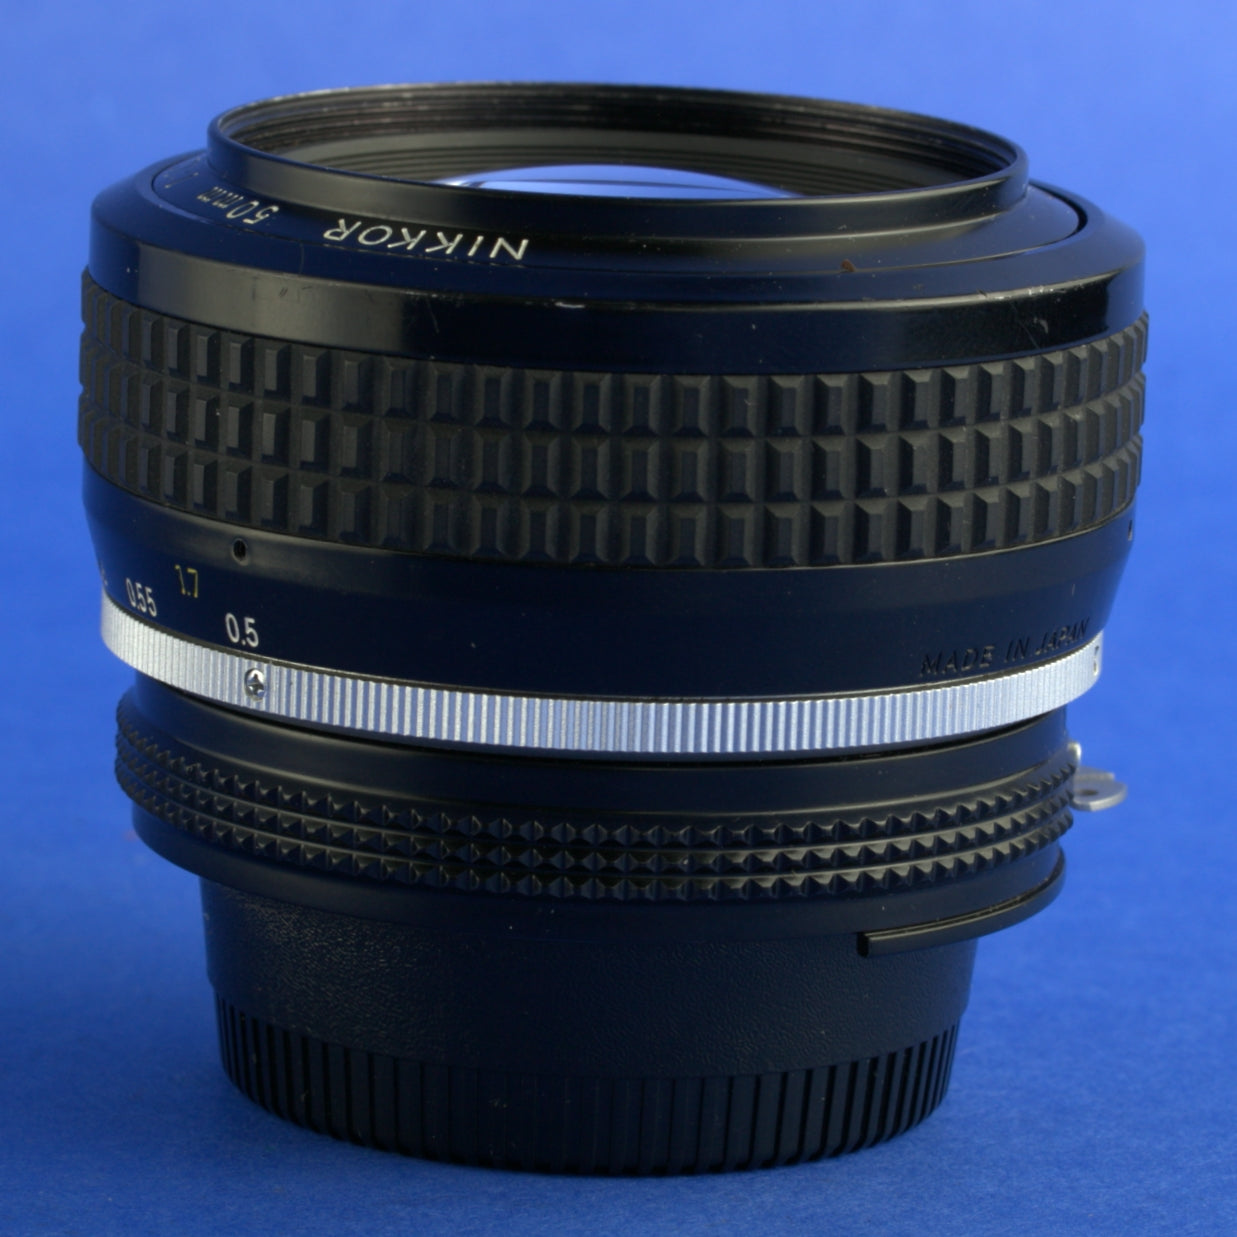 Nikon Nikkor 50mm 1.2 Ai Lens Beautiful Condition